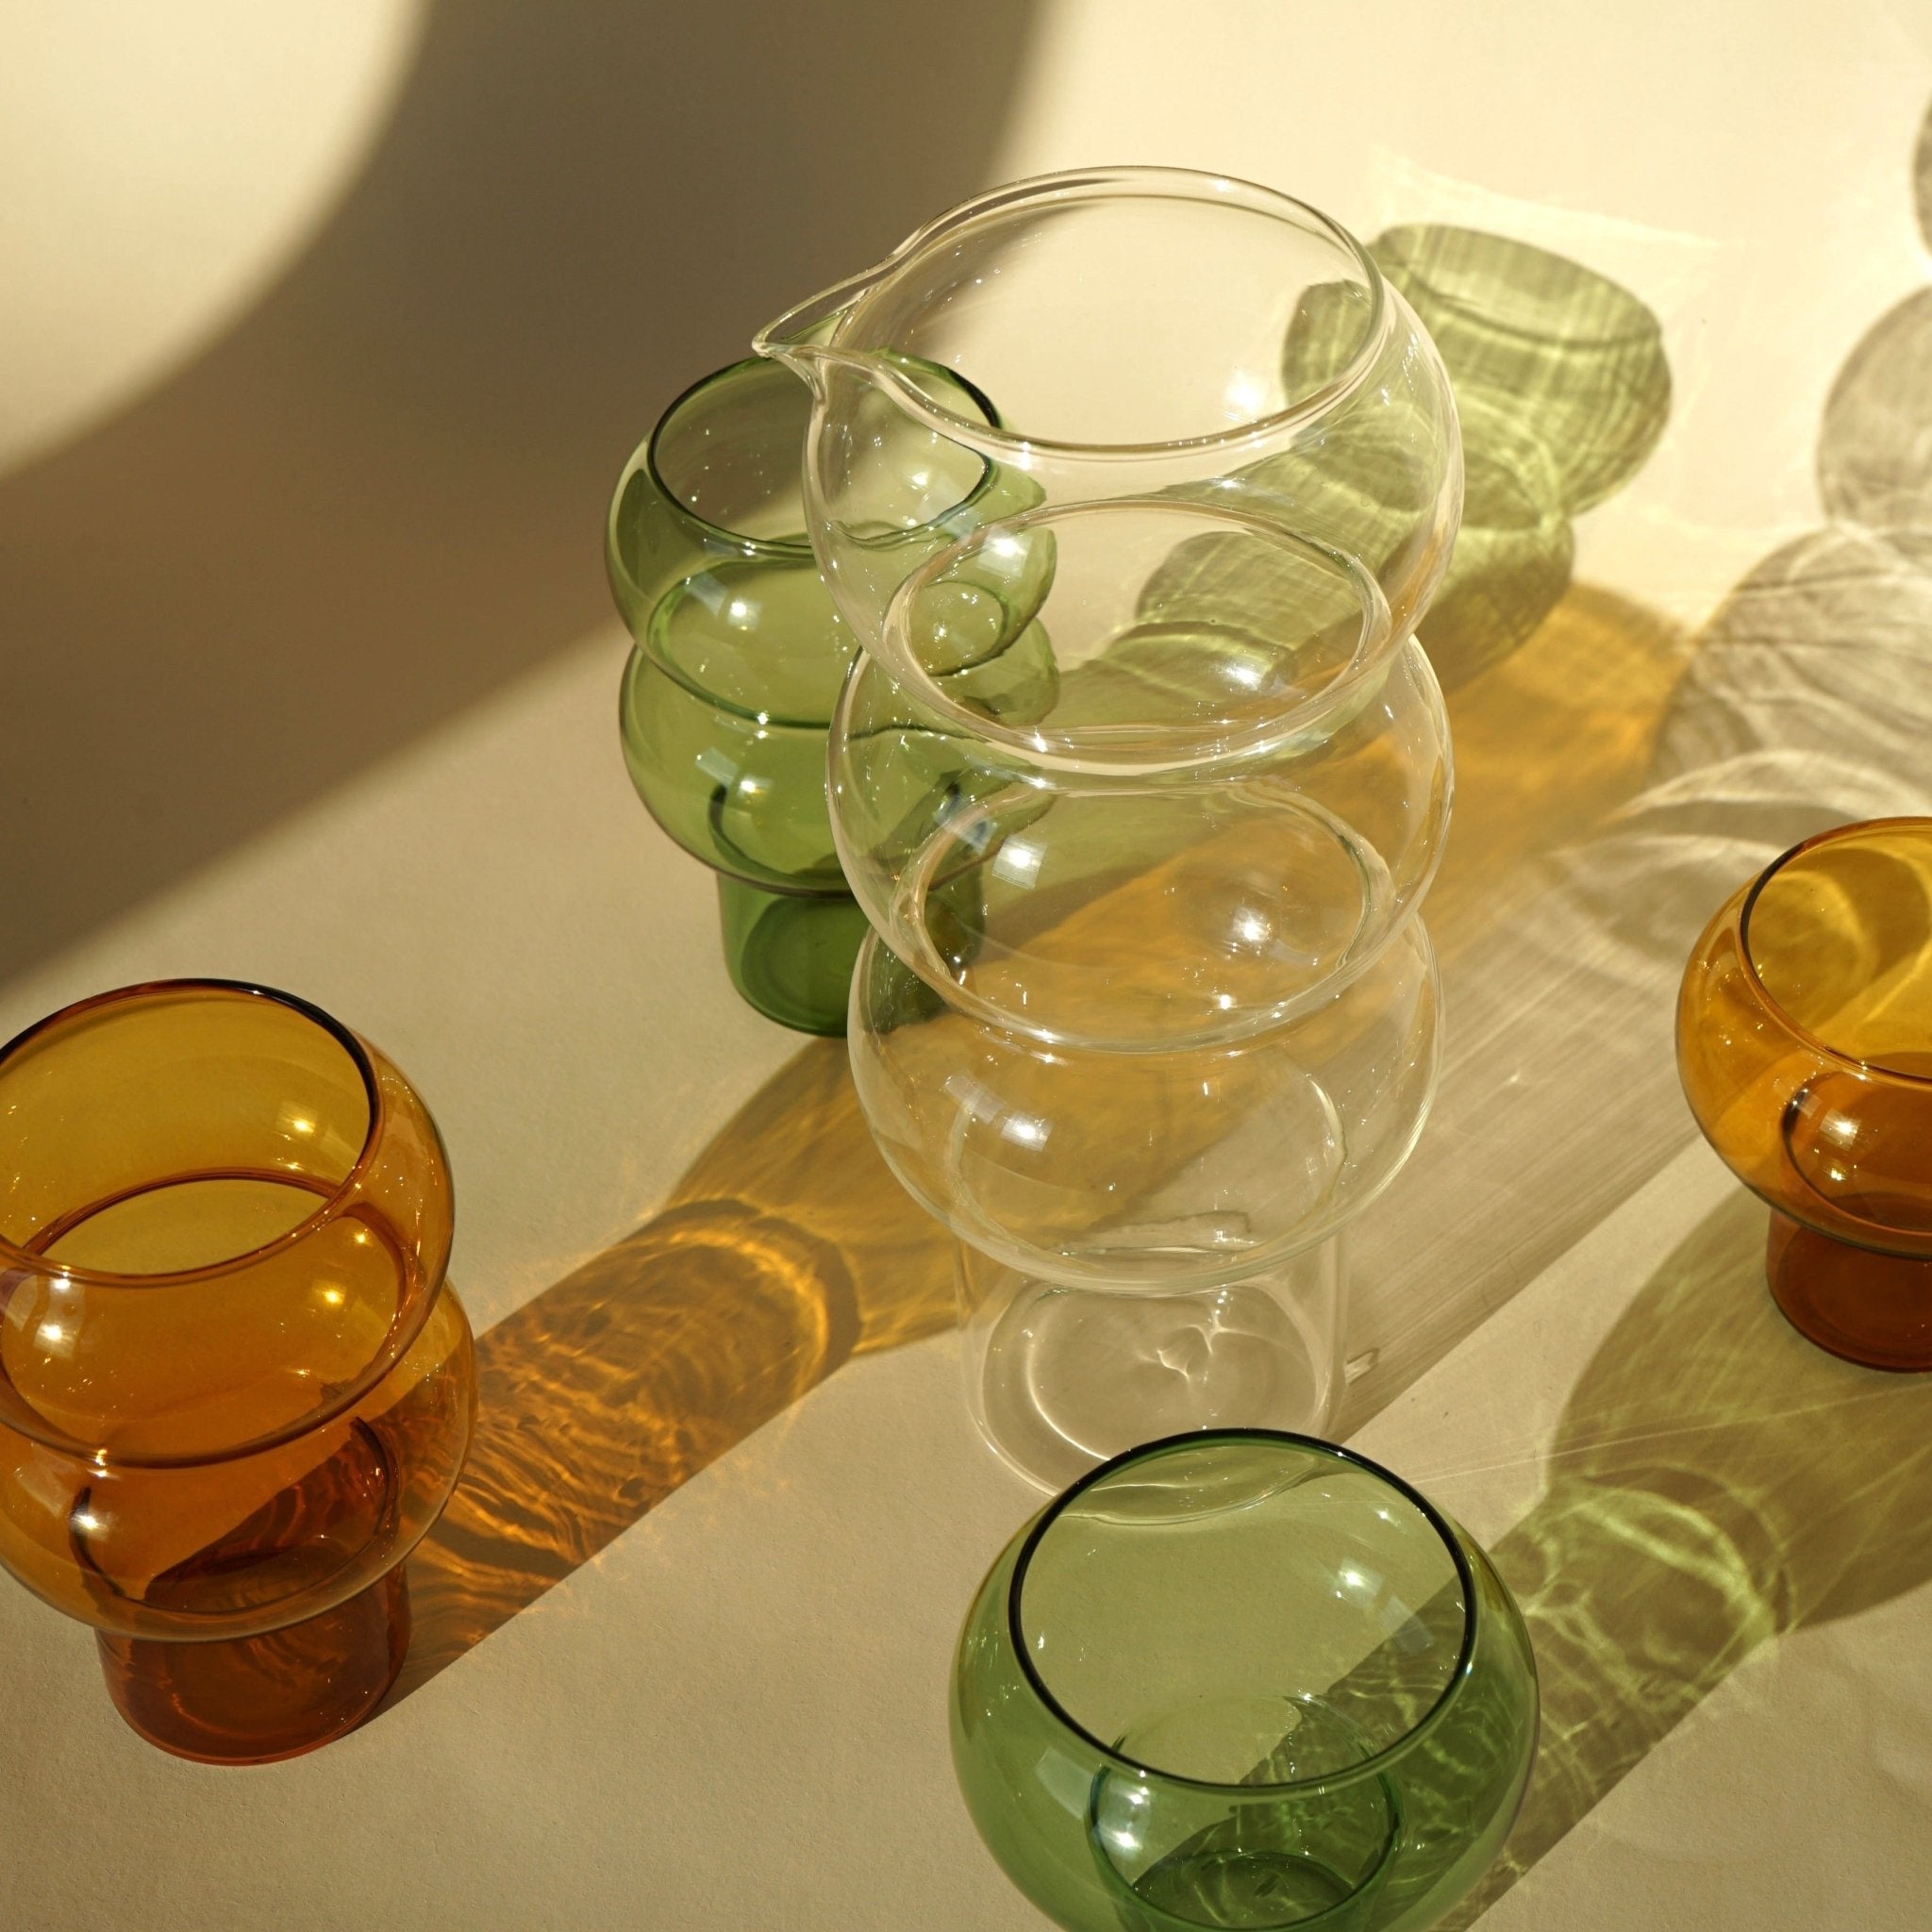 Bubble Glass Amber - POPvault